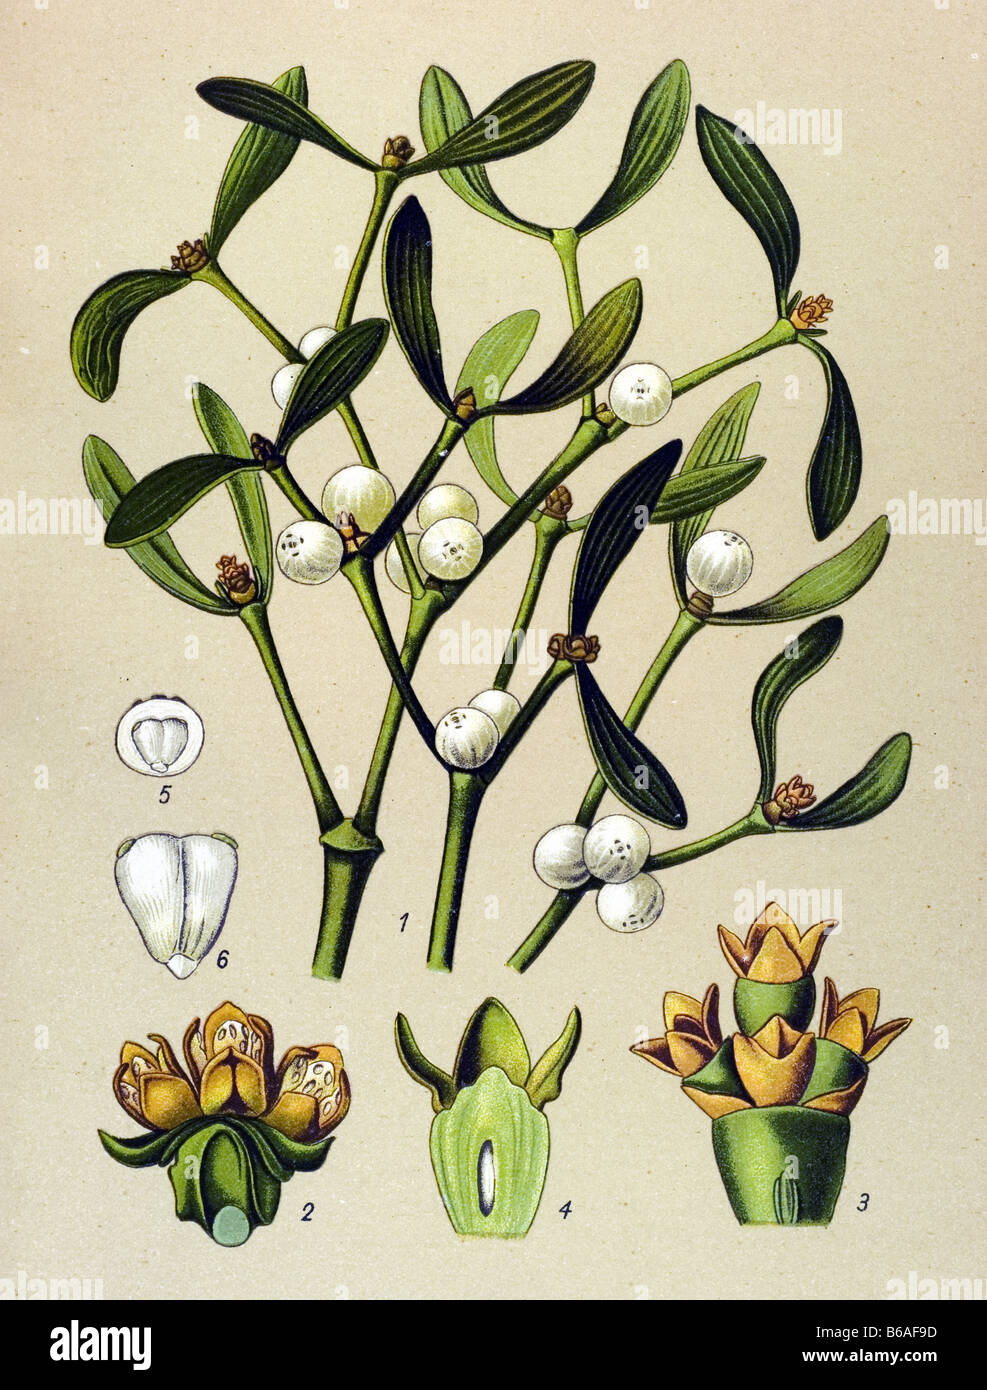 Common mistletoe, Viscum album poisonous plants illustrations Stock Photo